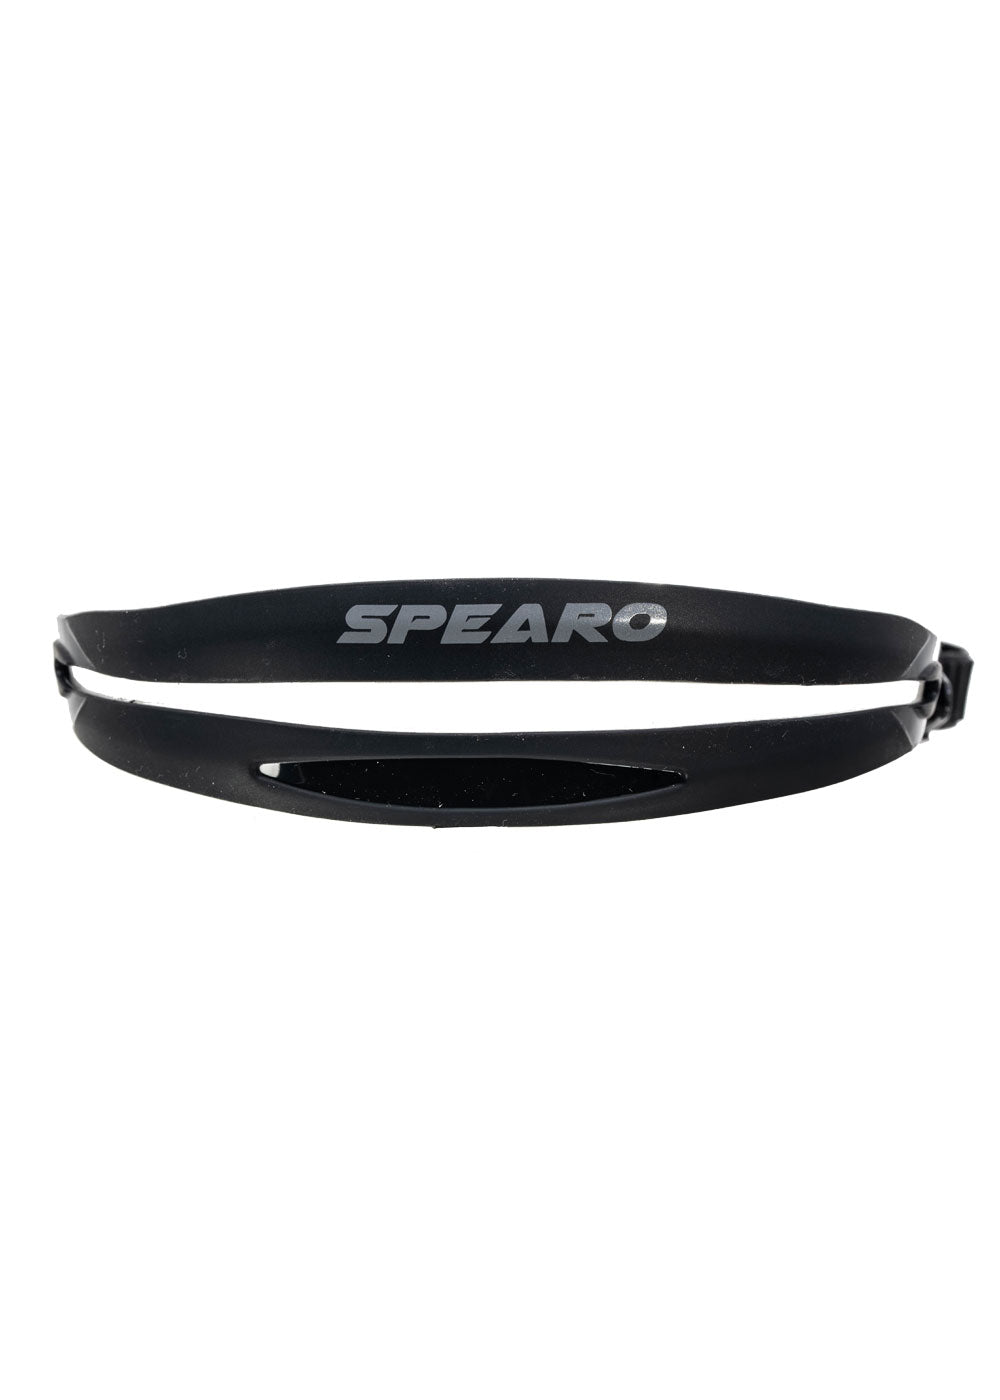 Spearo Kingie Mask - Dual Lens